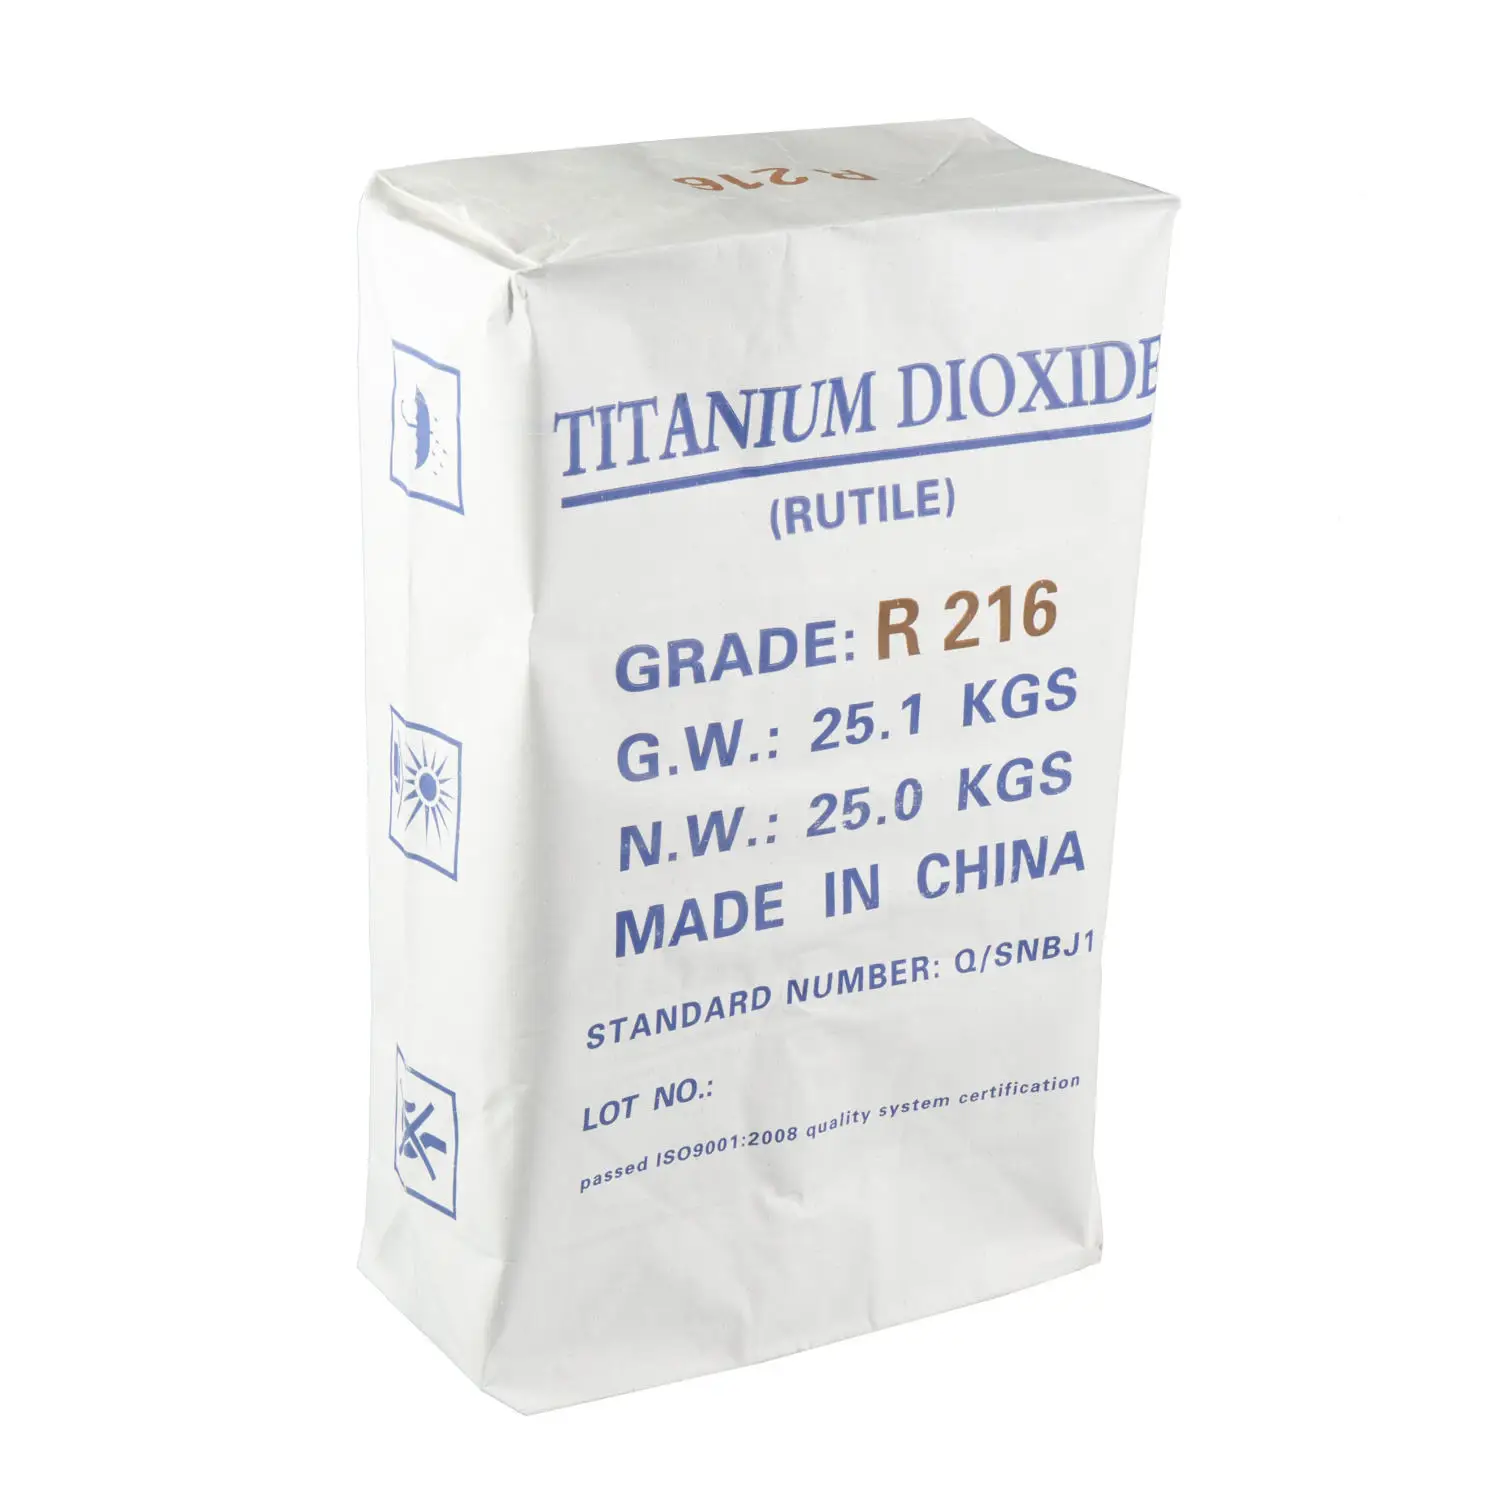 White HDR 108 Tio2 food grade Titanium Dioxide rutile for printing